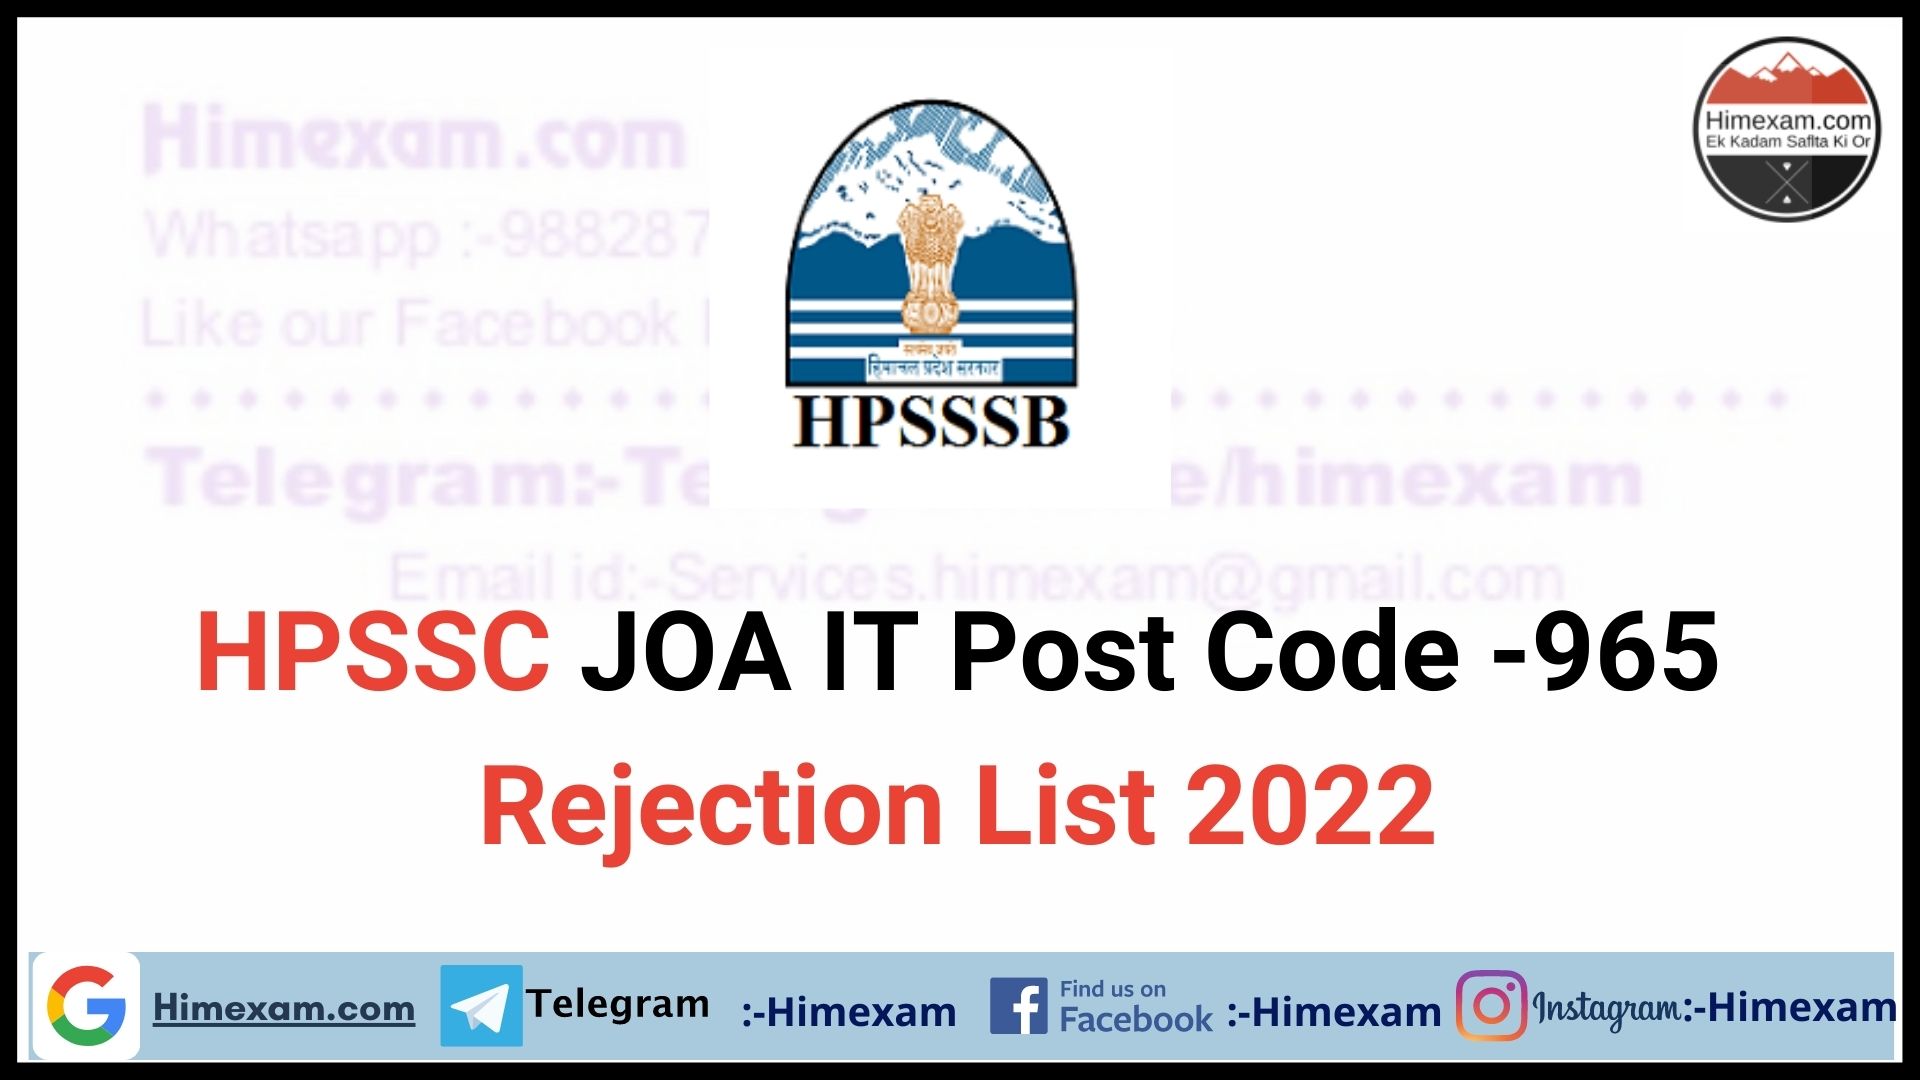 HPSSC JOA IT Post Code -965 Rejection List 2022